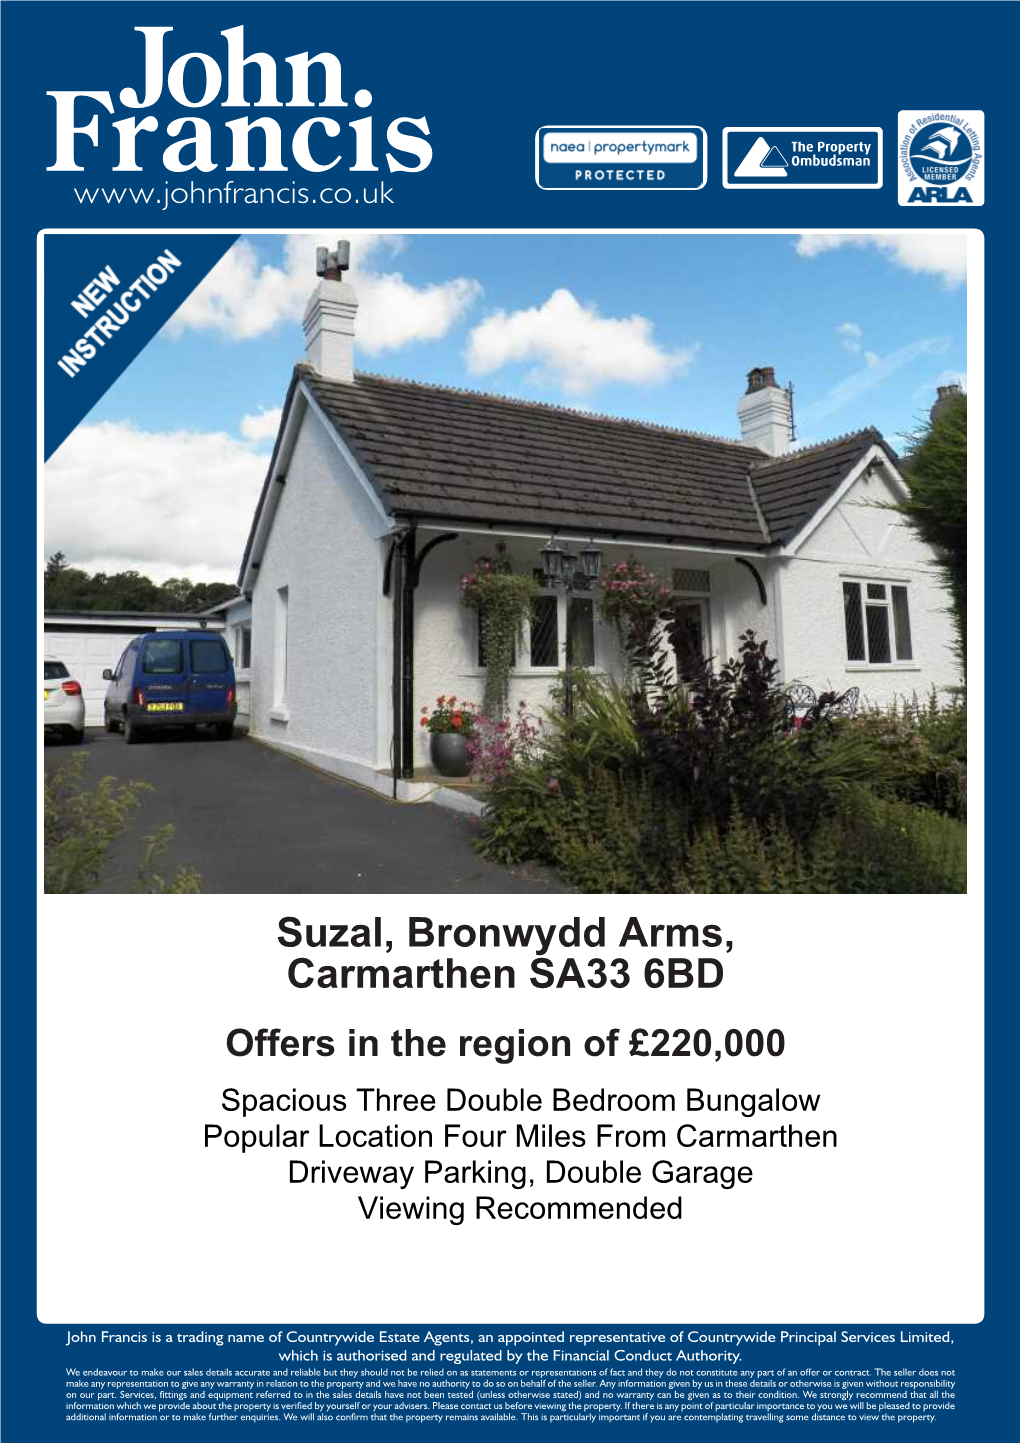 Suzal, Bronwydd Arms, Carmarthen SA33